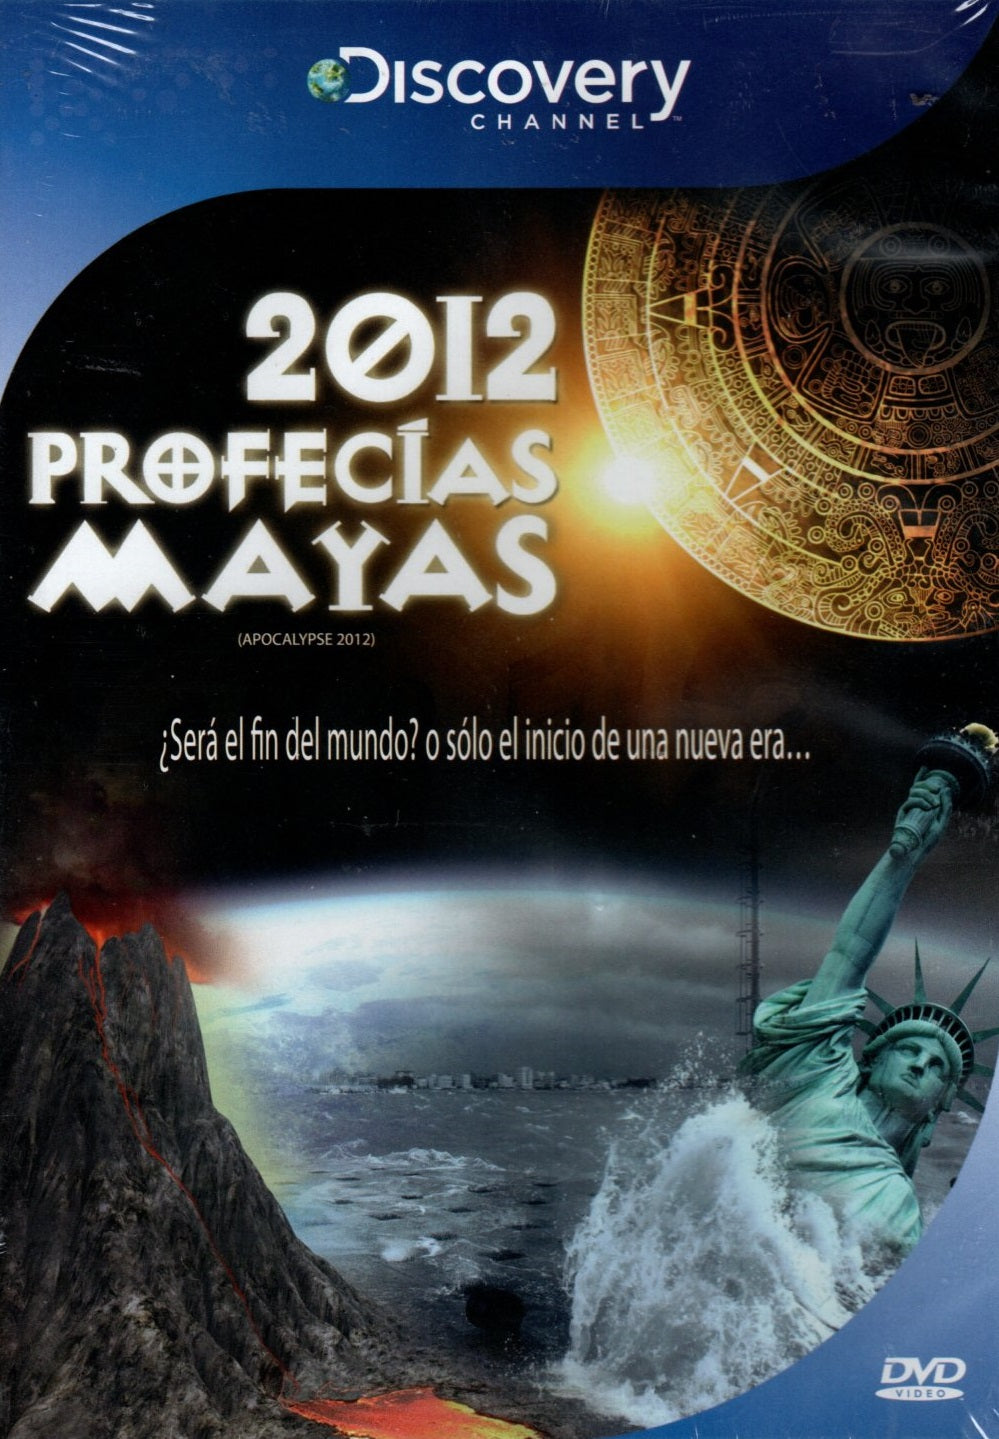 DVD 2012 PROFECIAS MAYAS